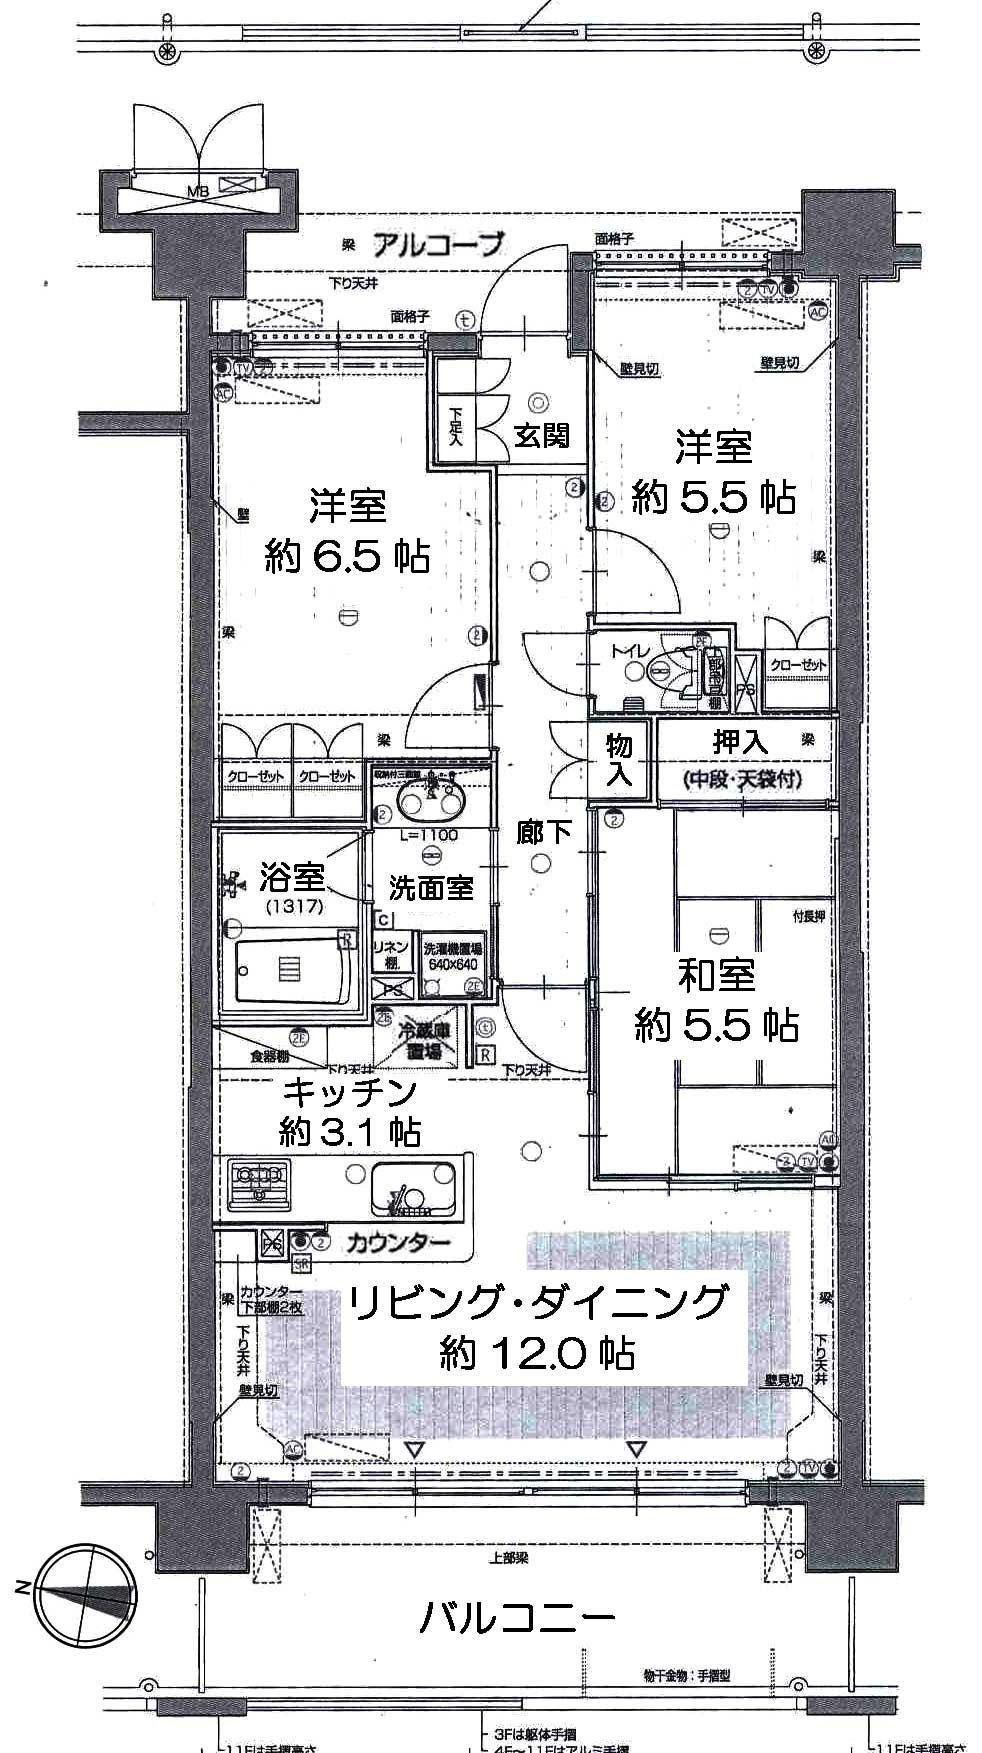 Floor plan. 3LDK, Price 17 million yen, Occupied area 70.41 sq m , Balcony area 12.4 sq m